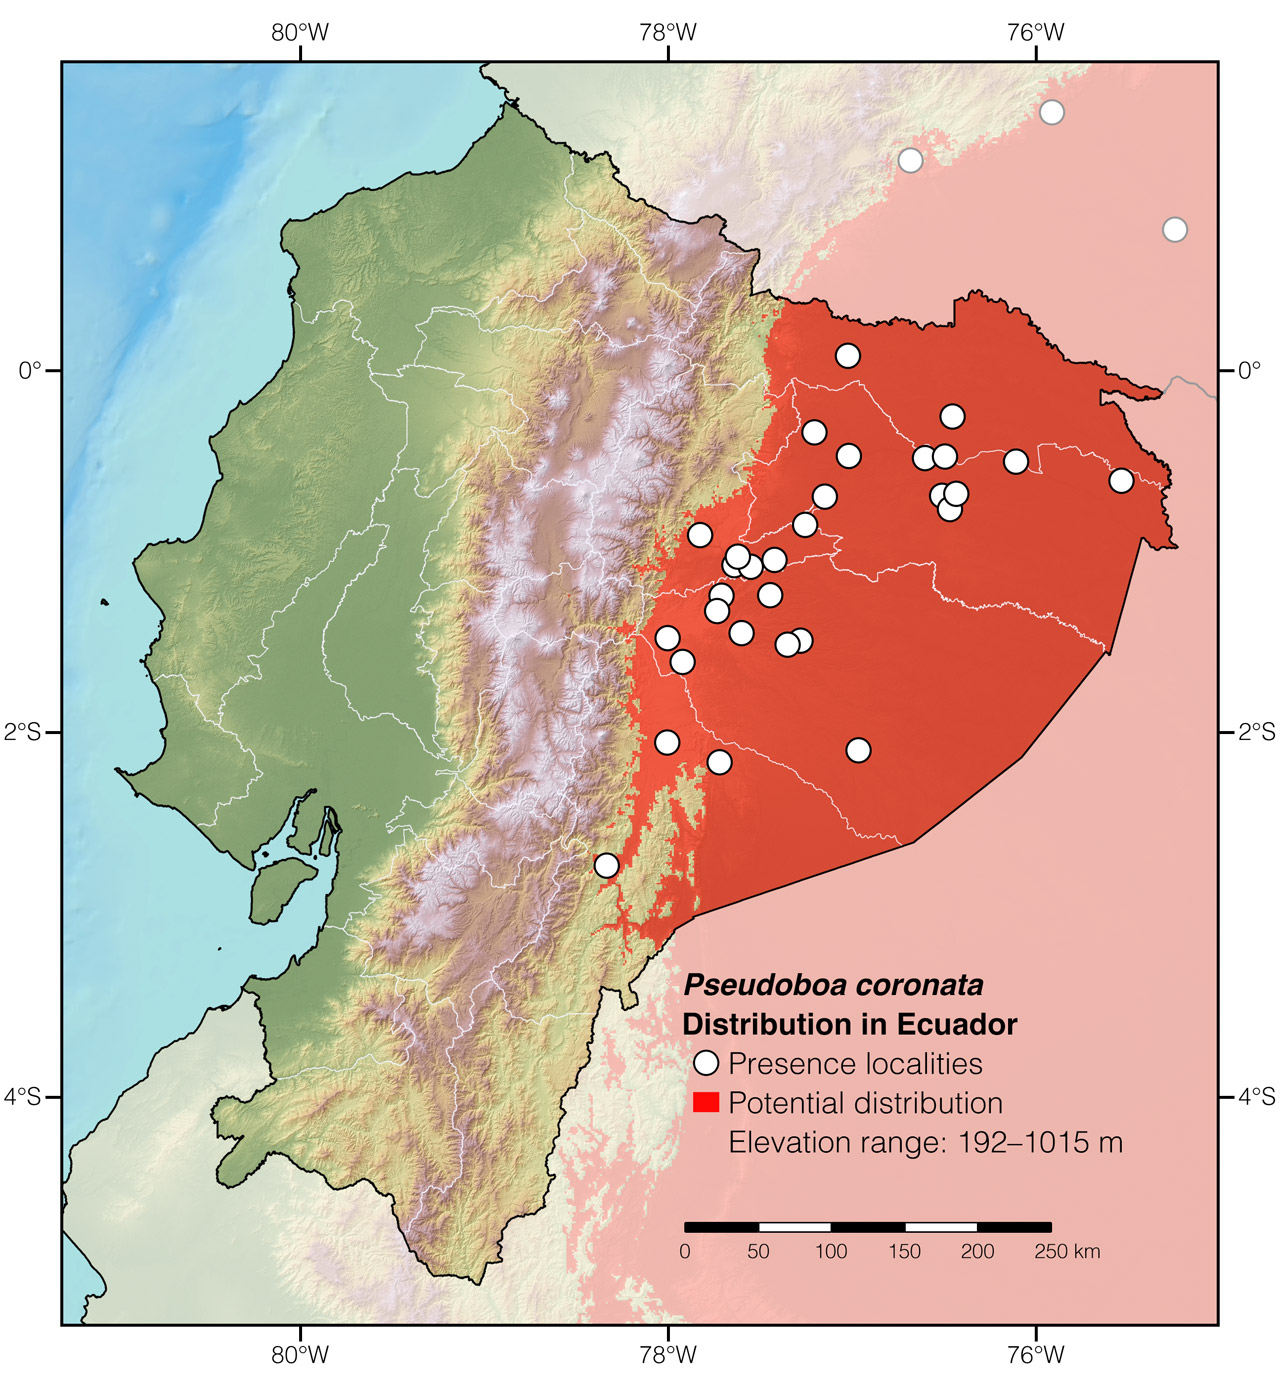 Distribution of Pseudoboa coronata in Ecuador